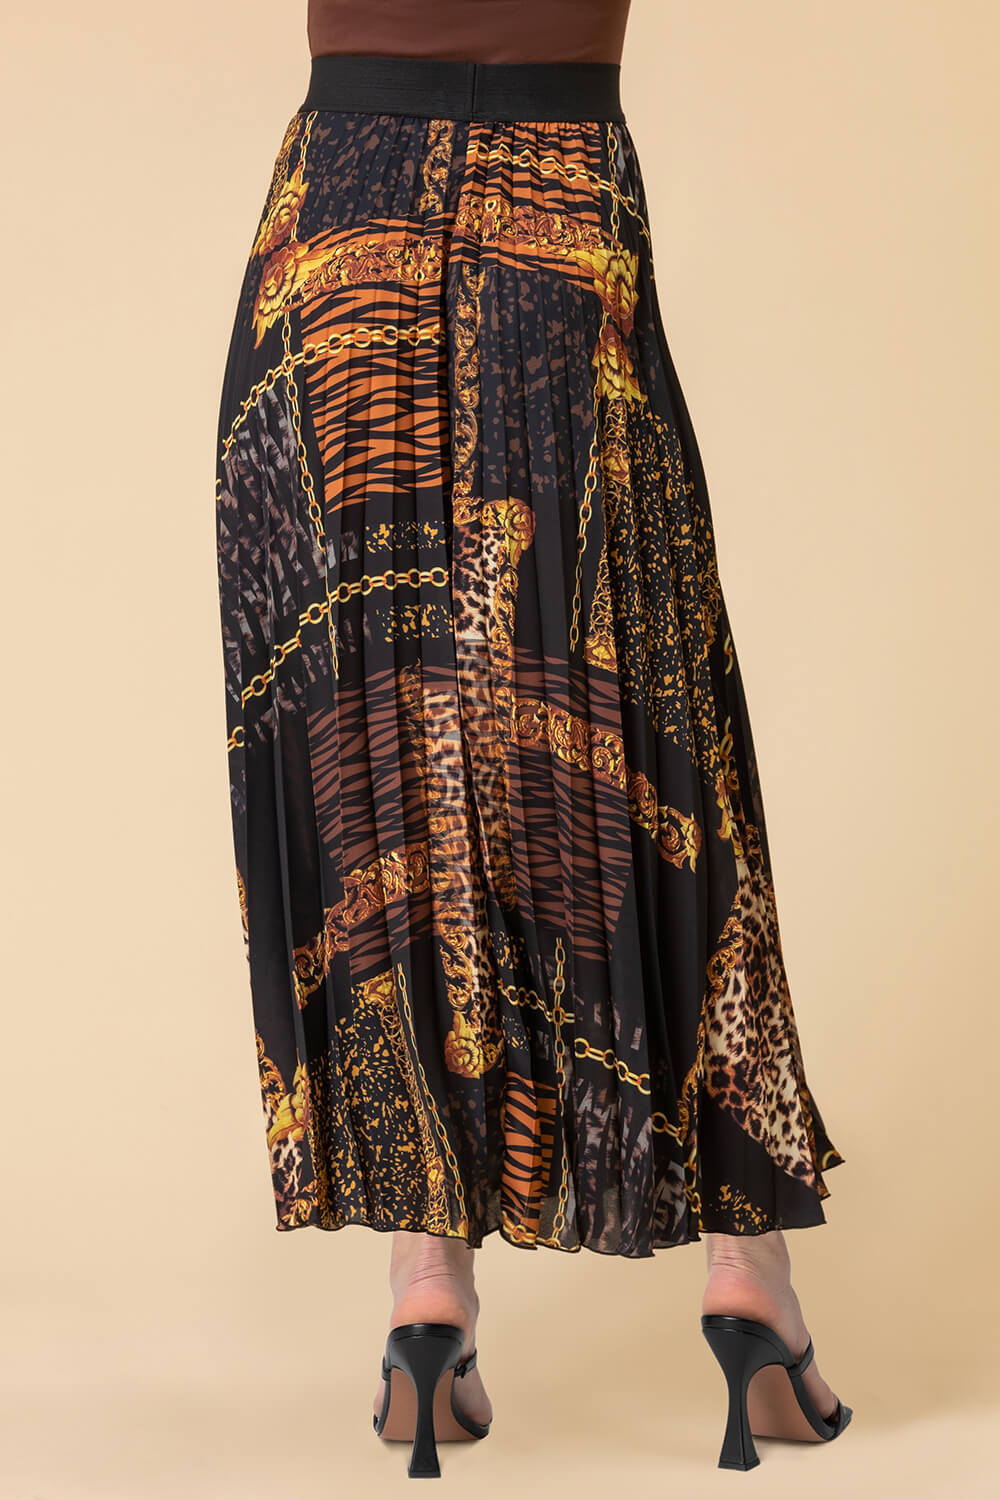 Rust Animal Chain Print Pleated Skirt, Image 2 of 4